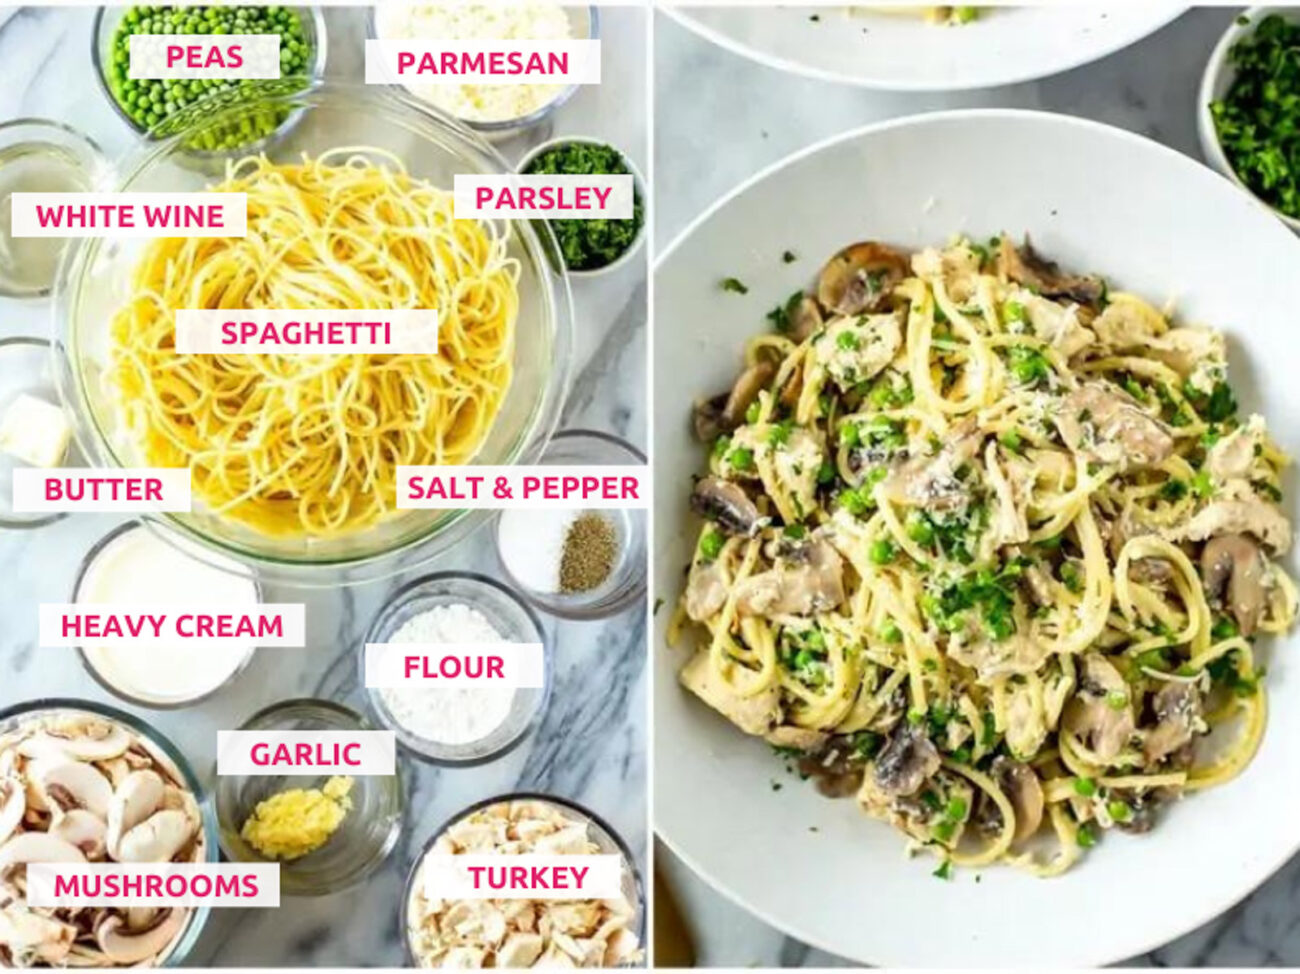 Ingredients for turkey tetrazzini: spaghetti, parsley, parmesan, peas, white wine, butter, heavy cream, flour, salt, pepper, mushrooms, garlic and turkey.